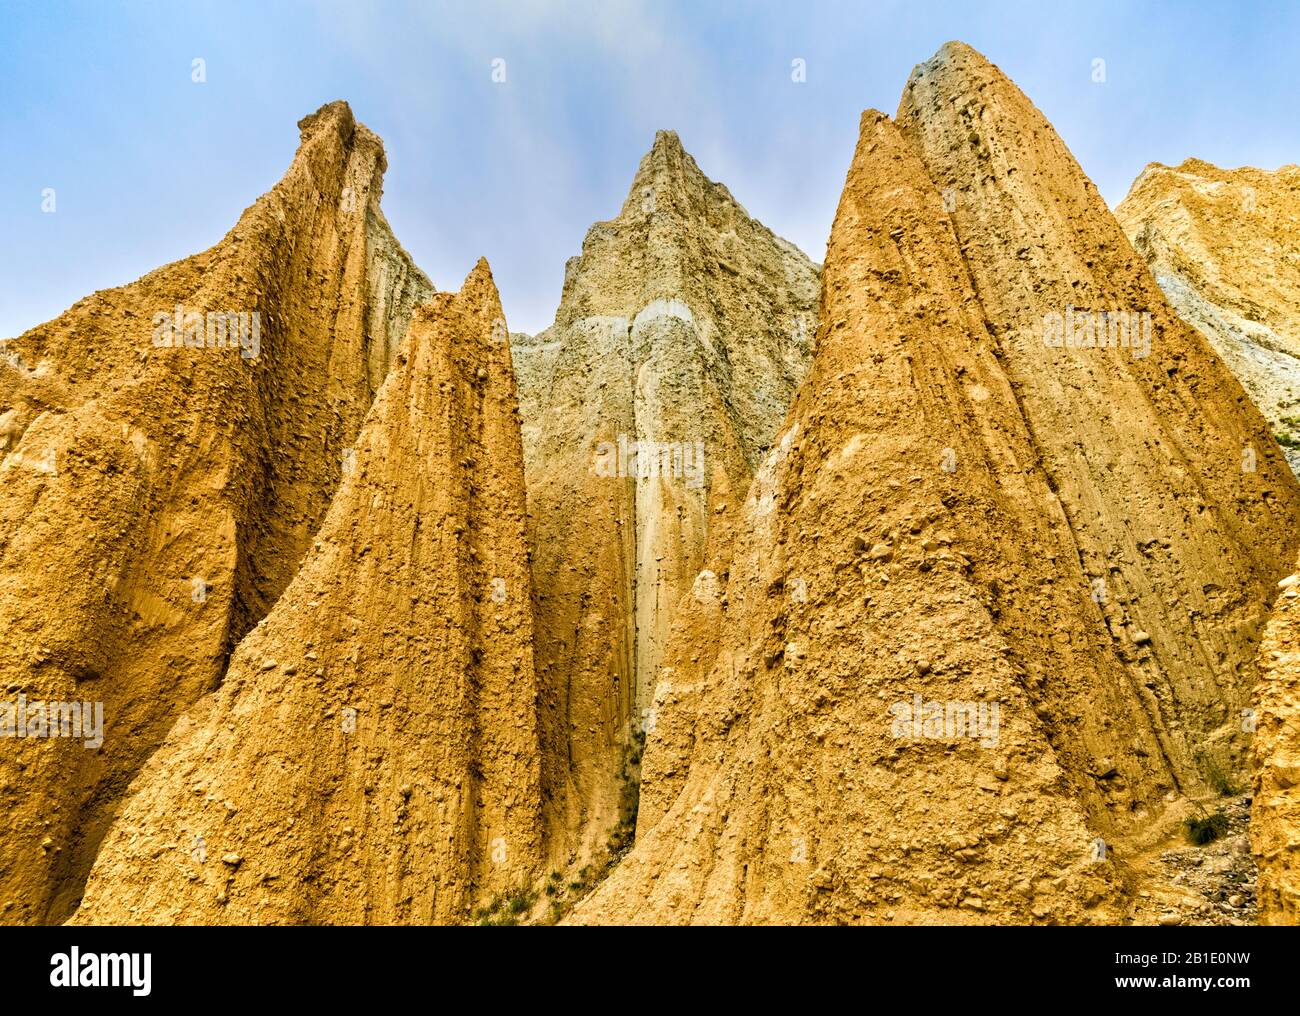 Omarama Clay Cliffs, rock formations made of silt and gravel, near town of Omarama, Canterbury Region, South Island, New Zealand Stock Photo